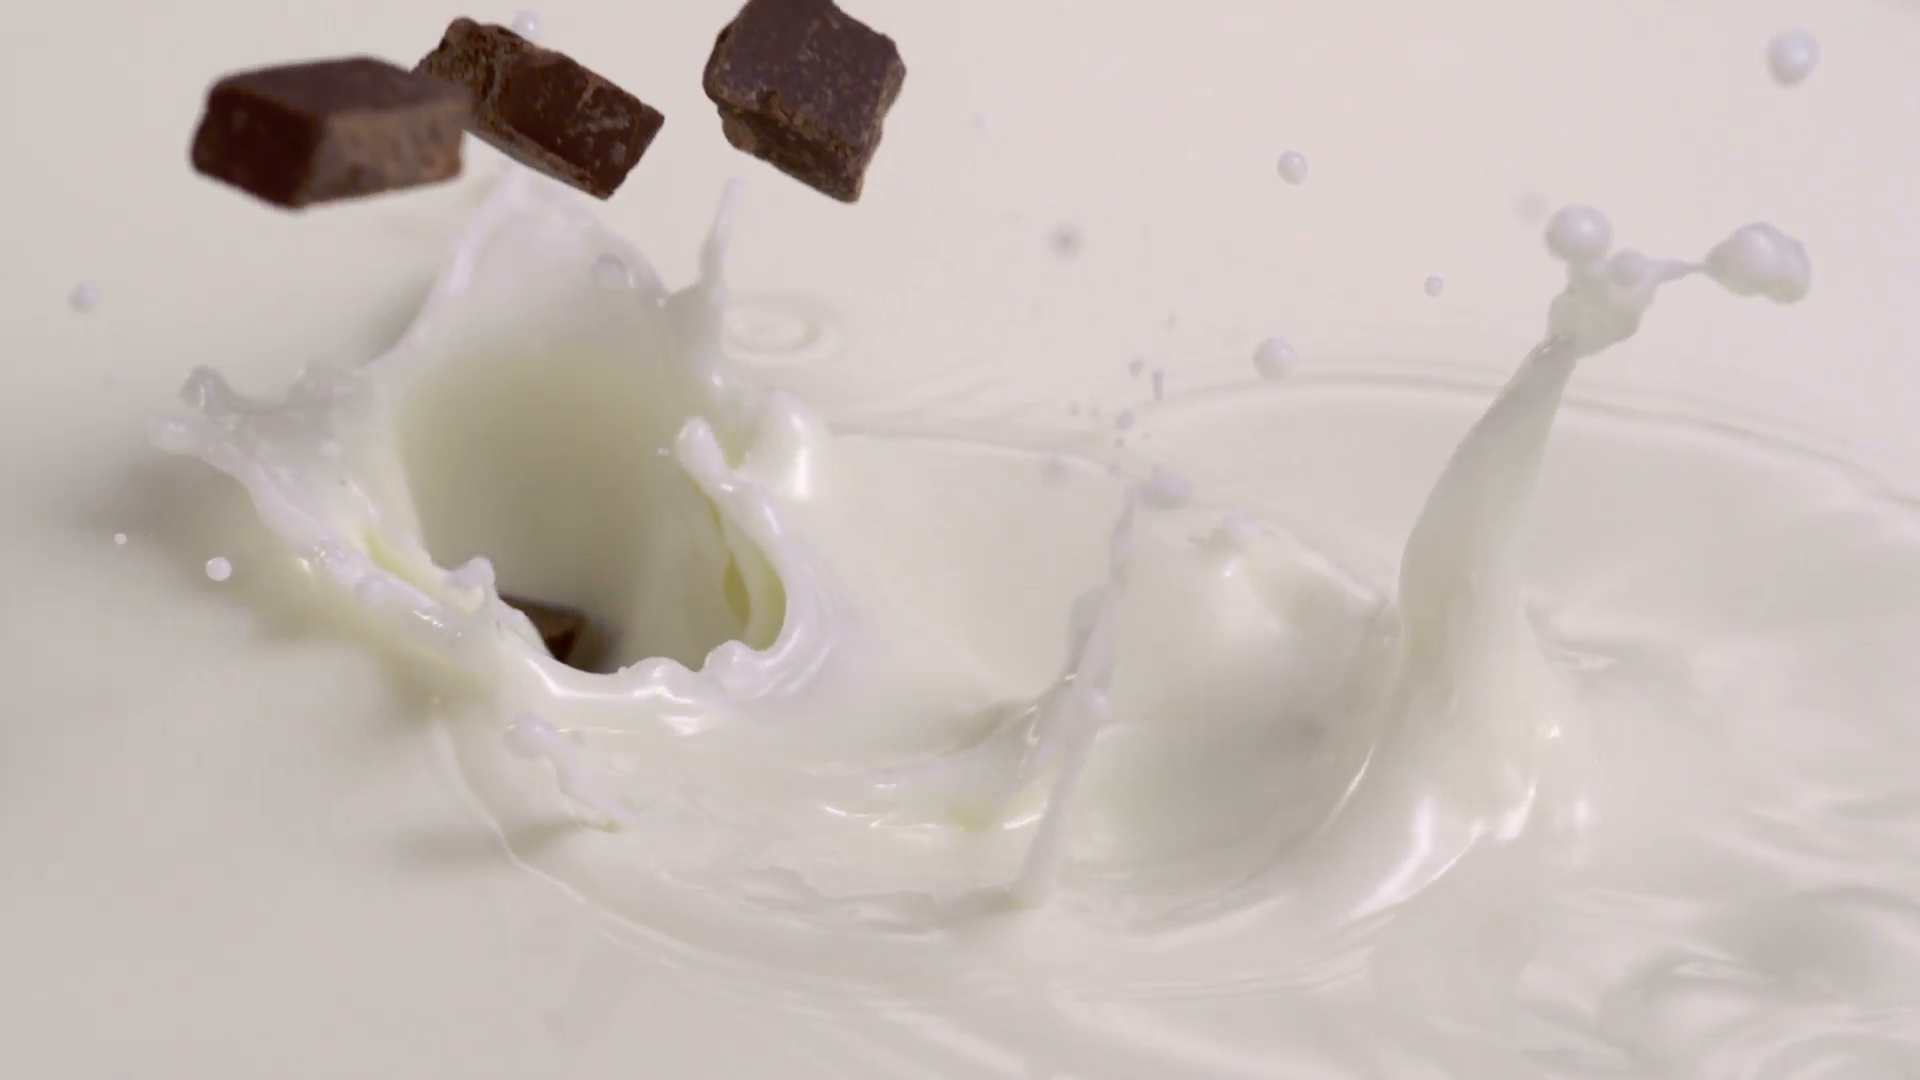 Chocolate in milk, Slow Motion Stock Video Footage - Videoblocks